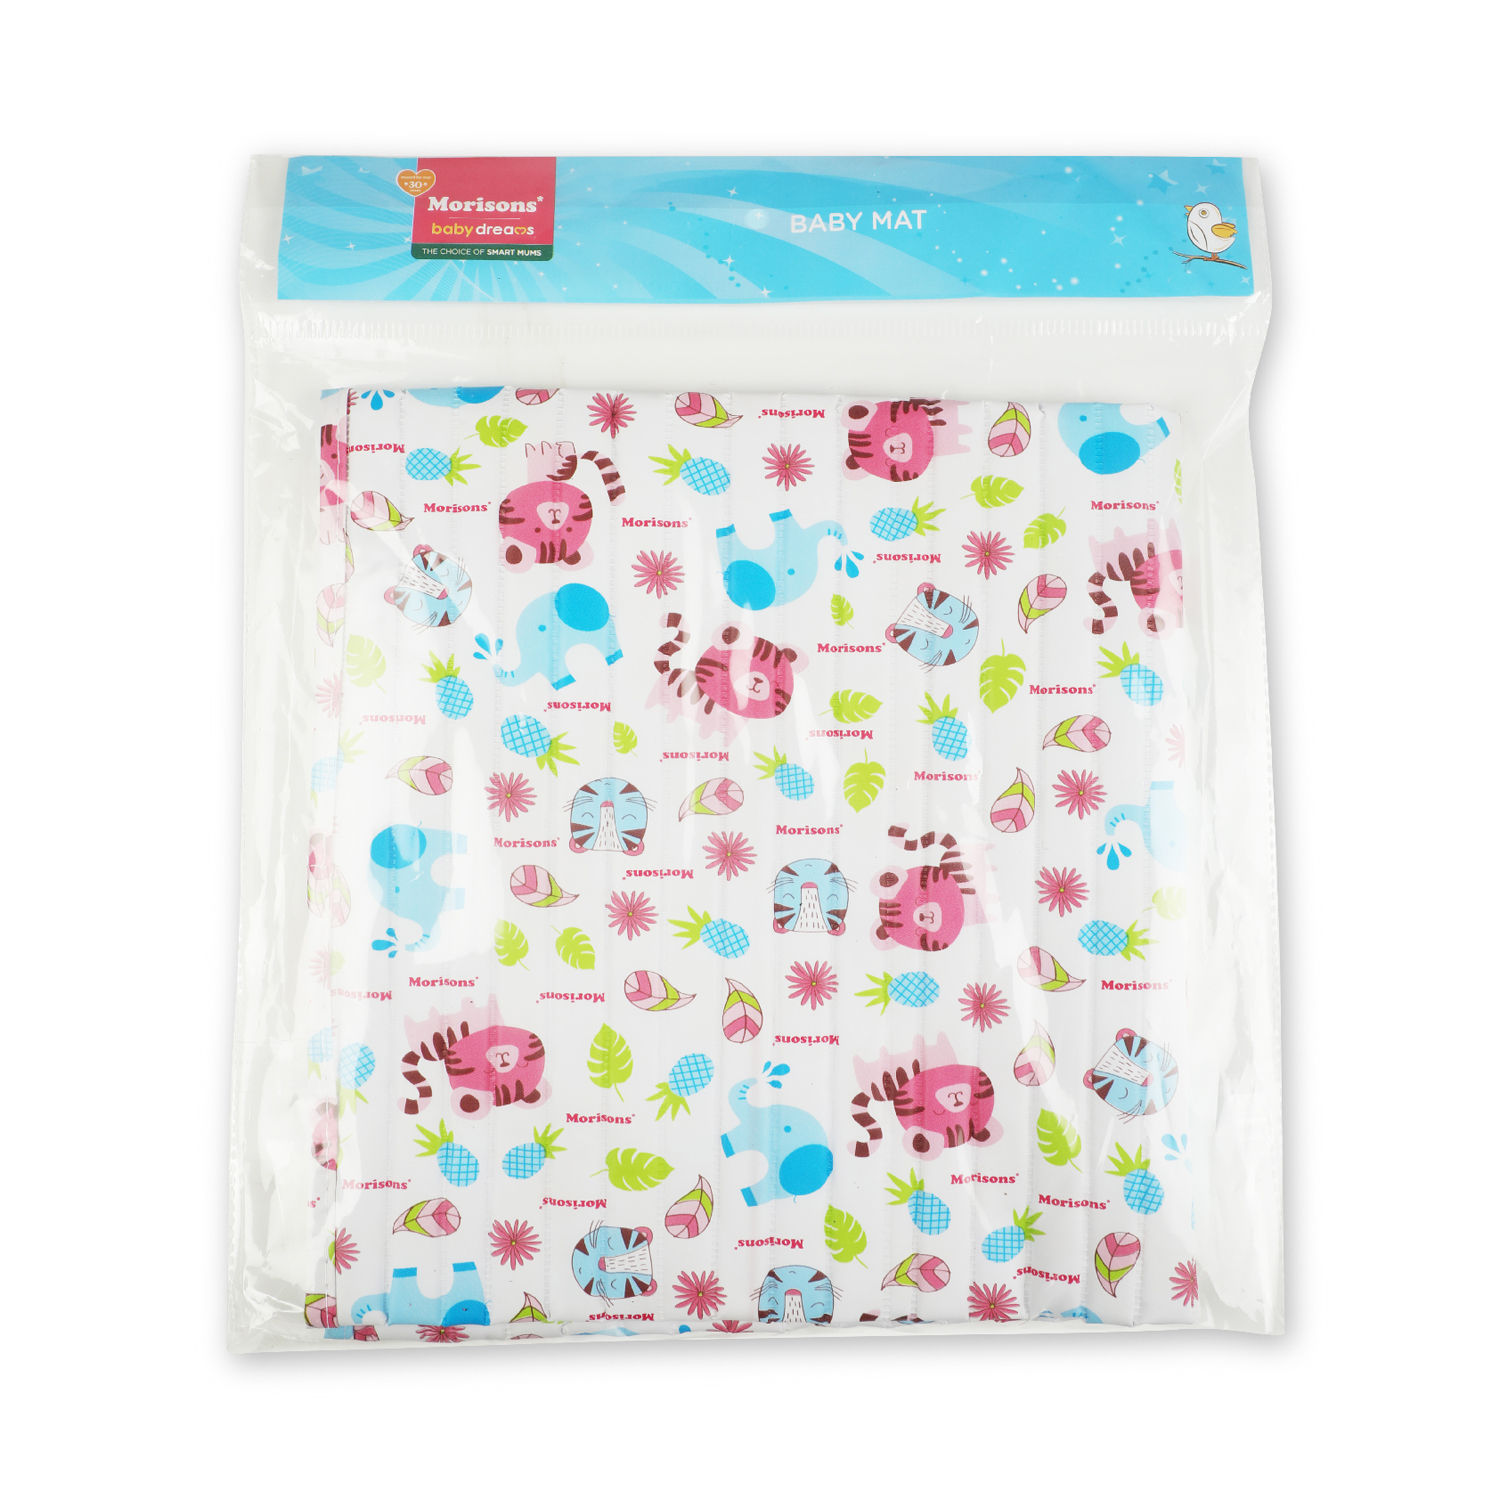 Morisons Baby Dreams PVC Mat (Large) - Animal Print